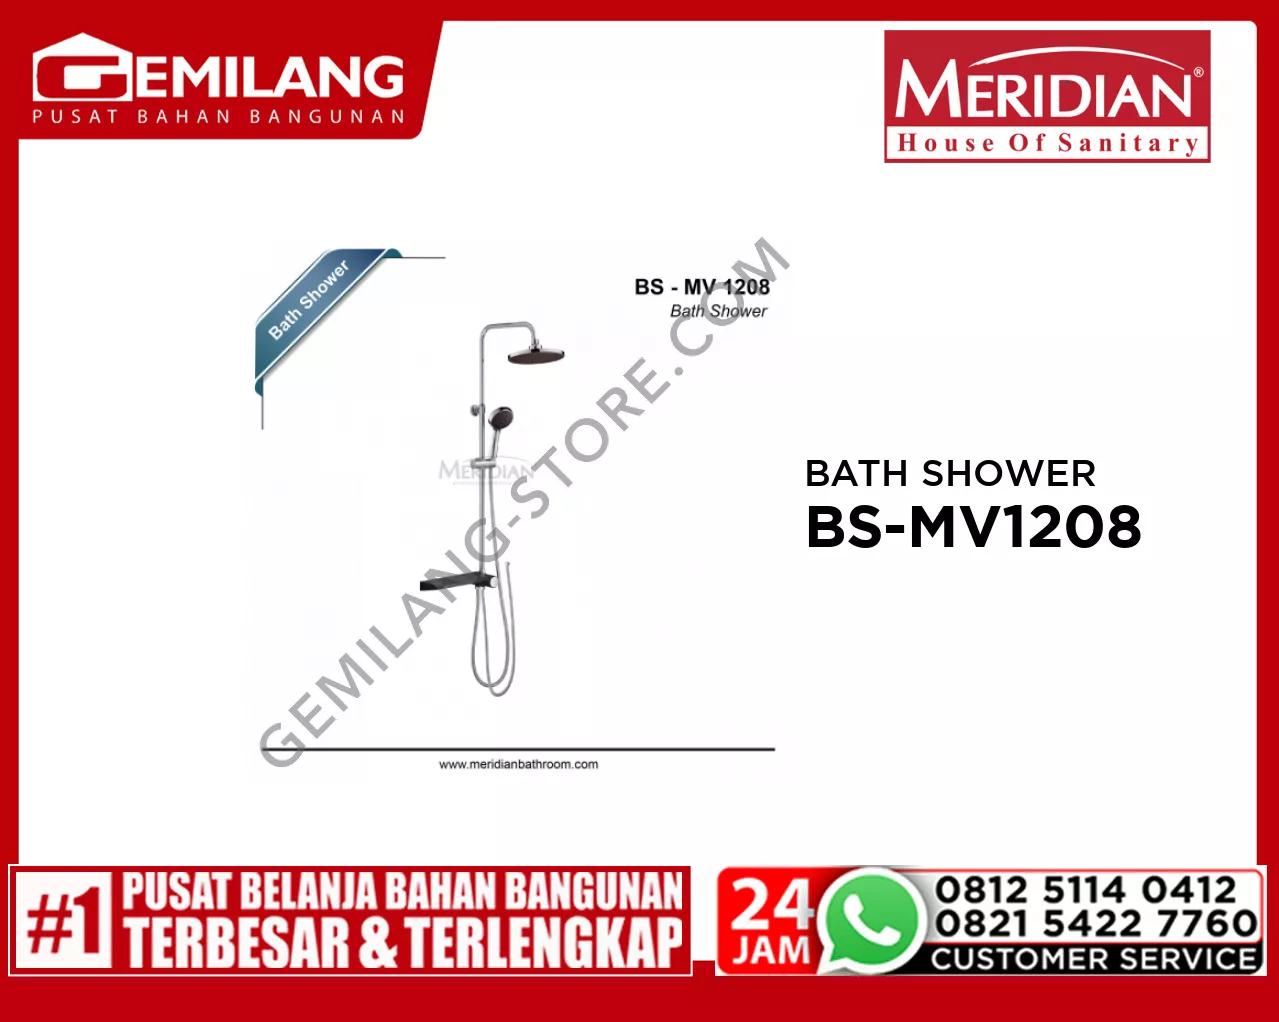 MERIDIAN BATH SHOWER BS-MV1208